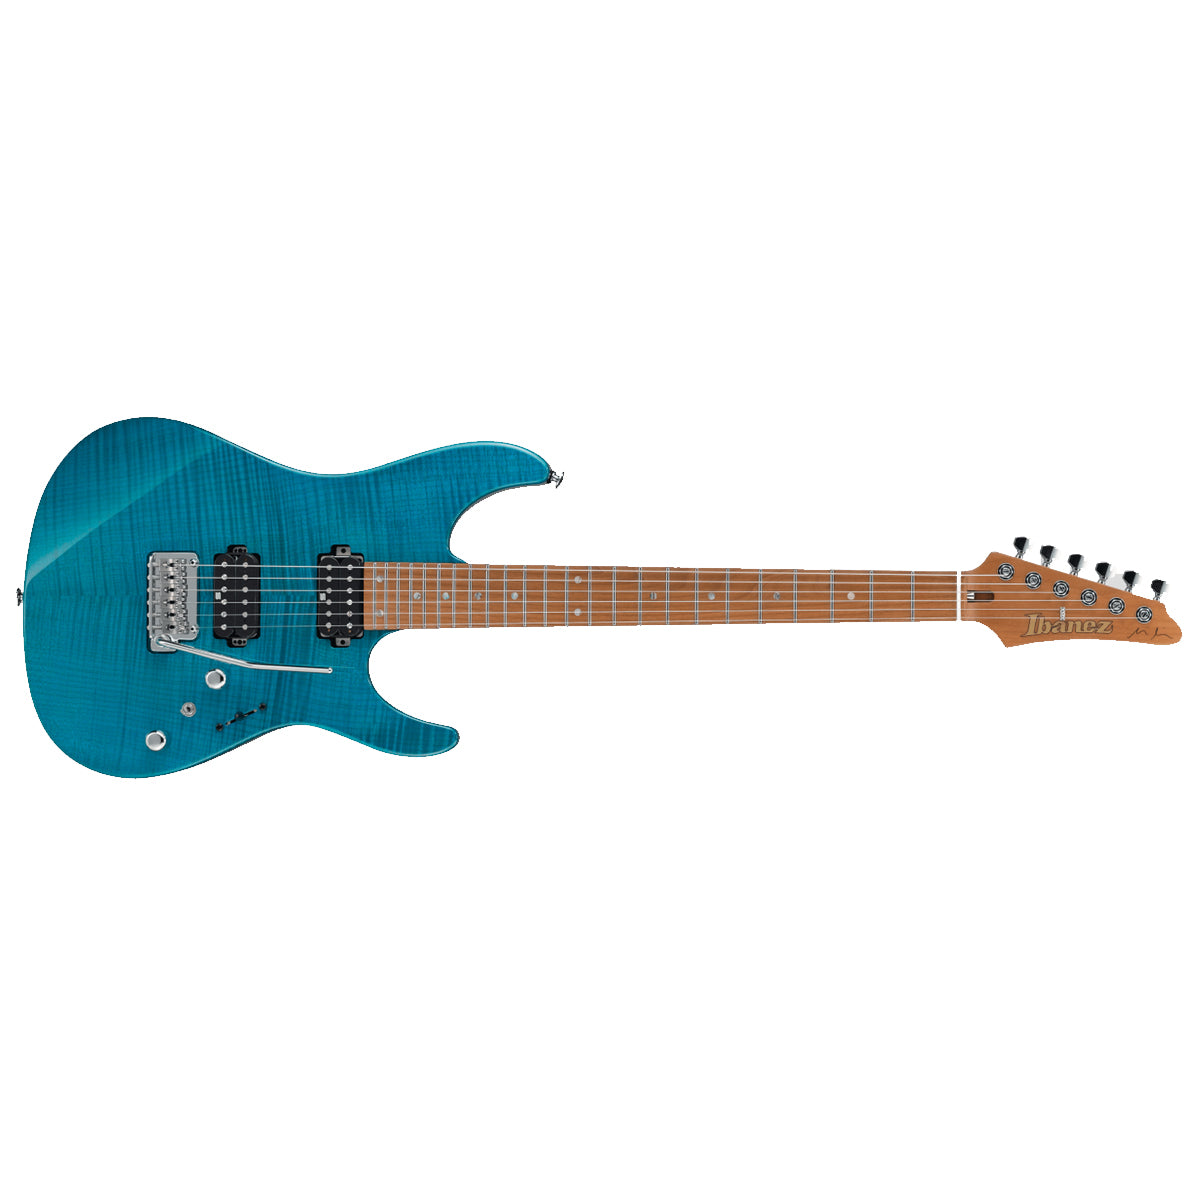 Ibanez MM1 Martin Miller Signature Electric Guitar Transparent Aqua Blue w/ Case